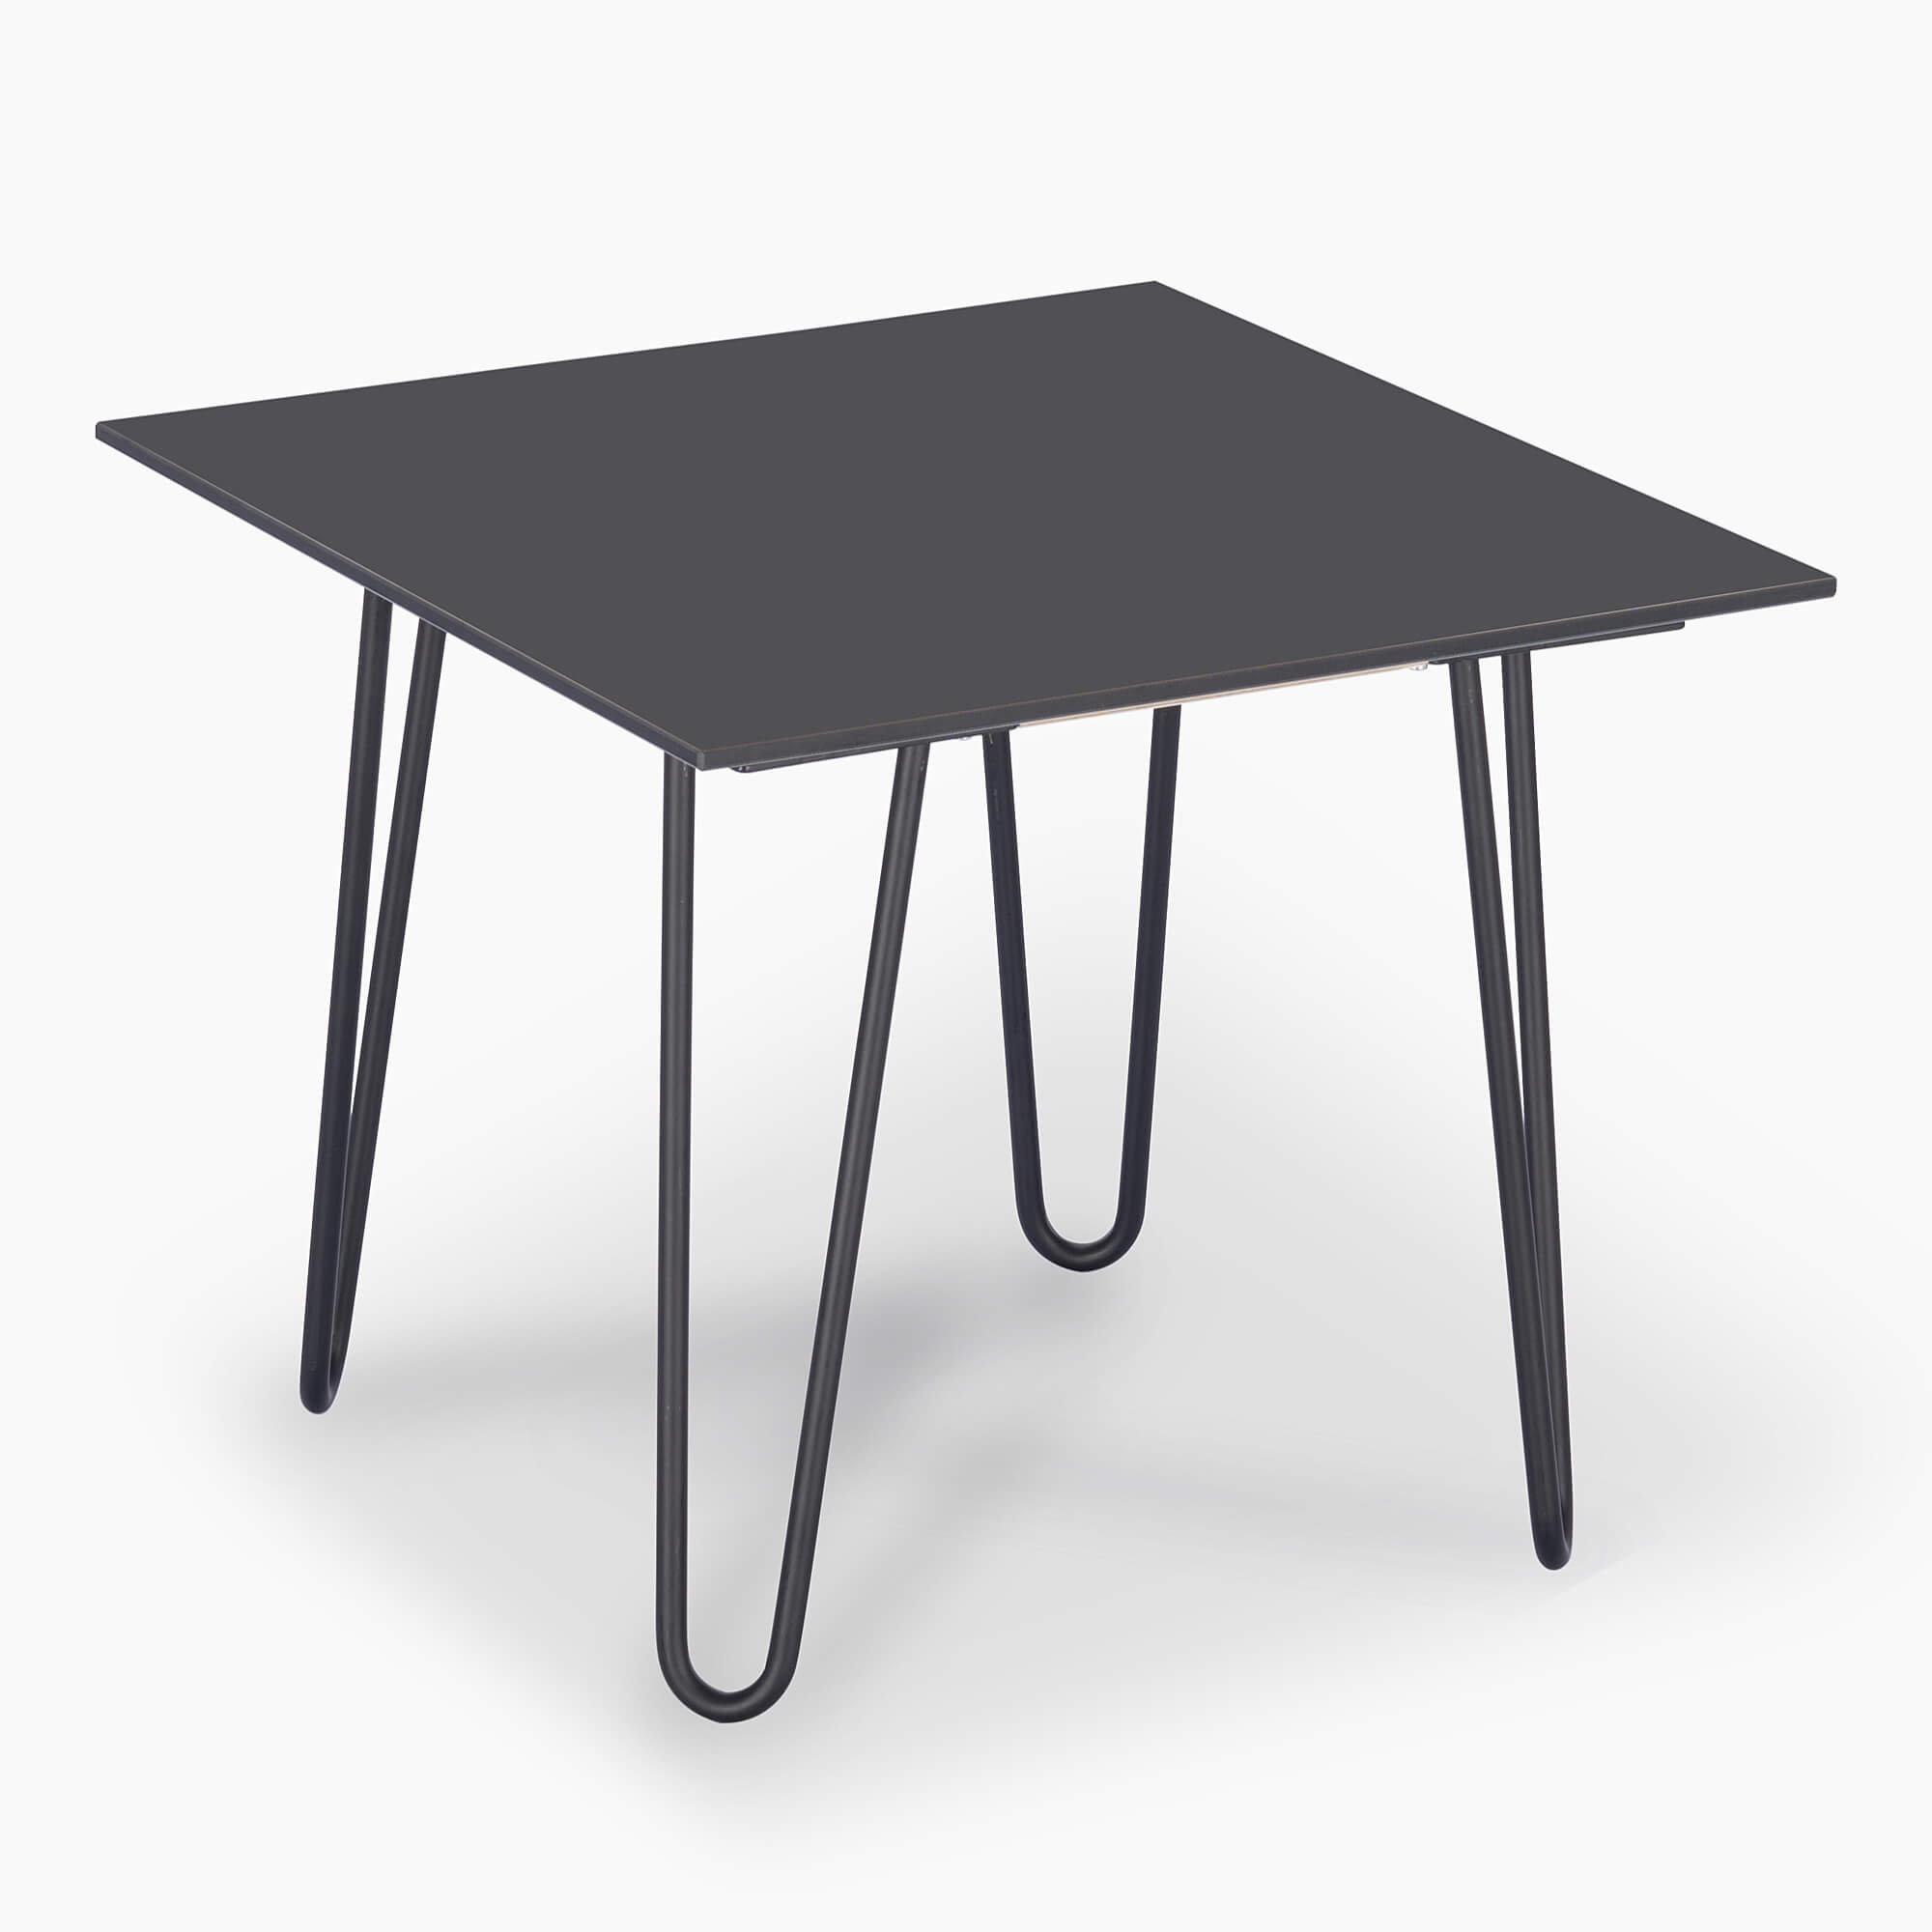 Designer-table-anthracite-dark-grey-50-x-50-cm-CoasLine